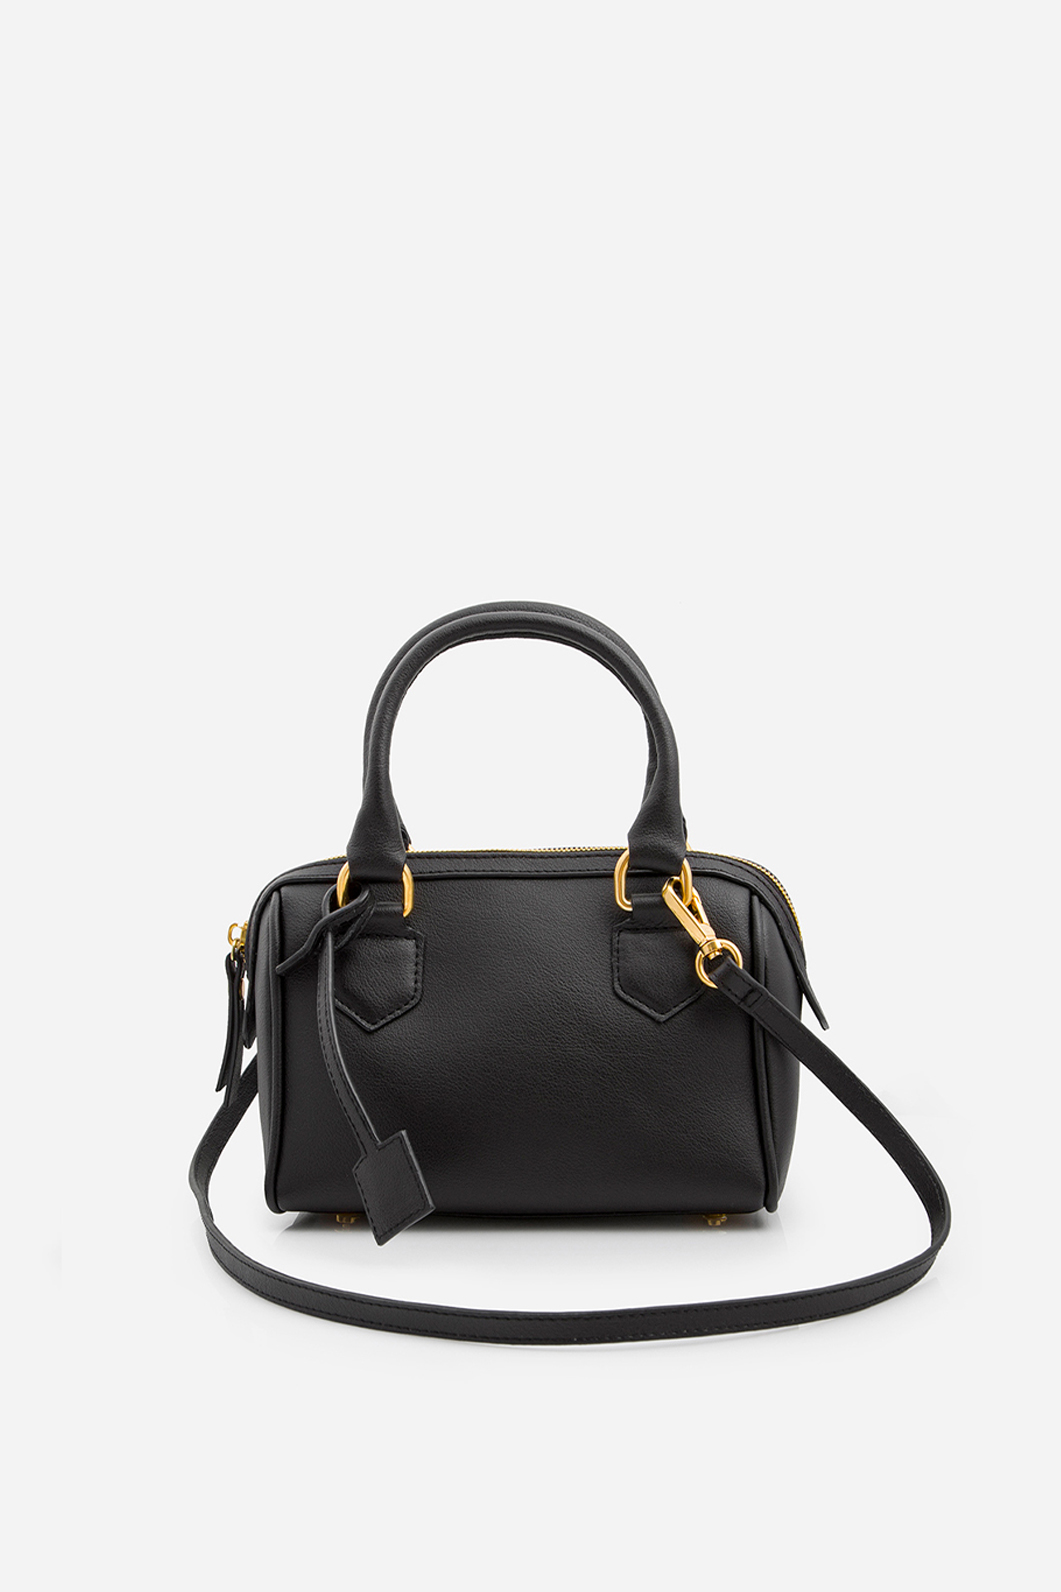 Drew black leather bag /gold/